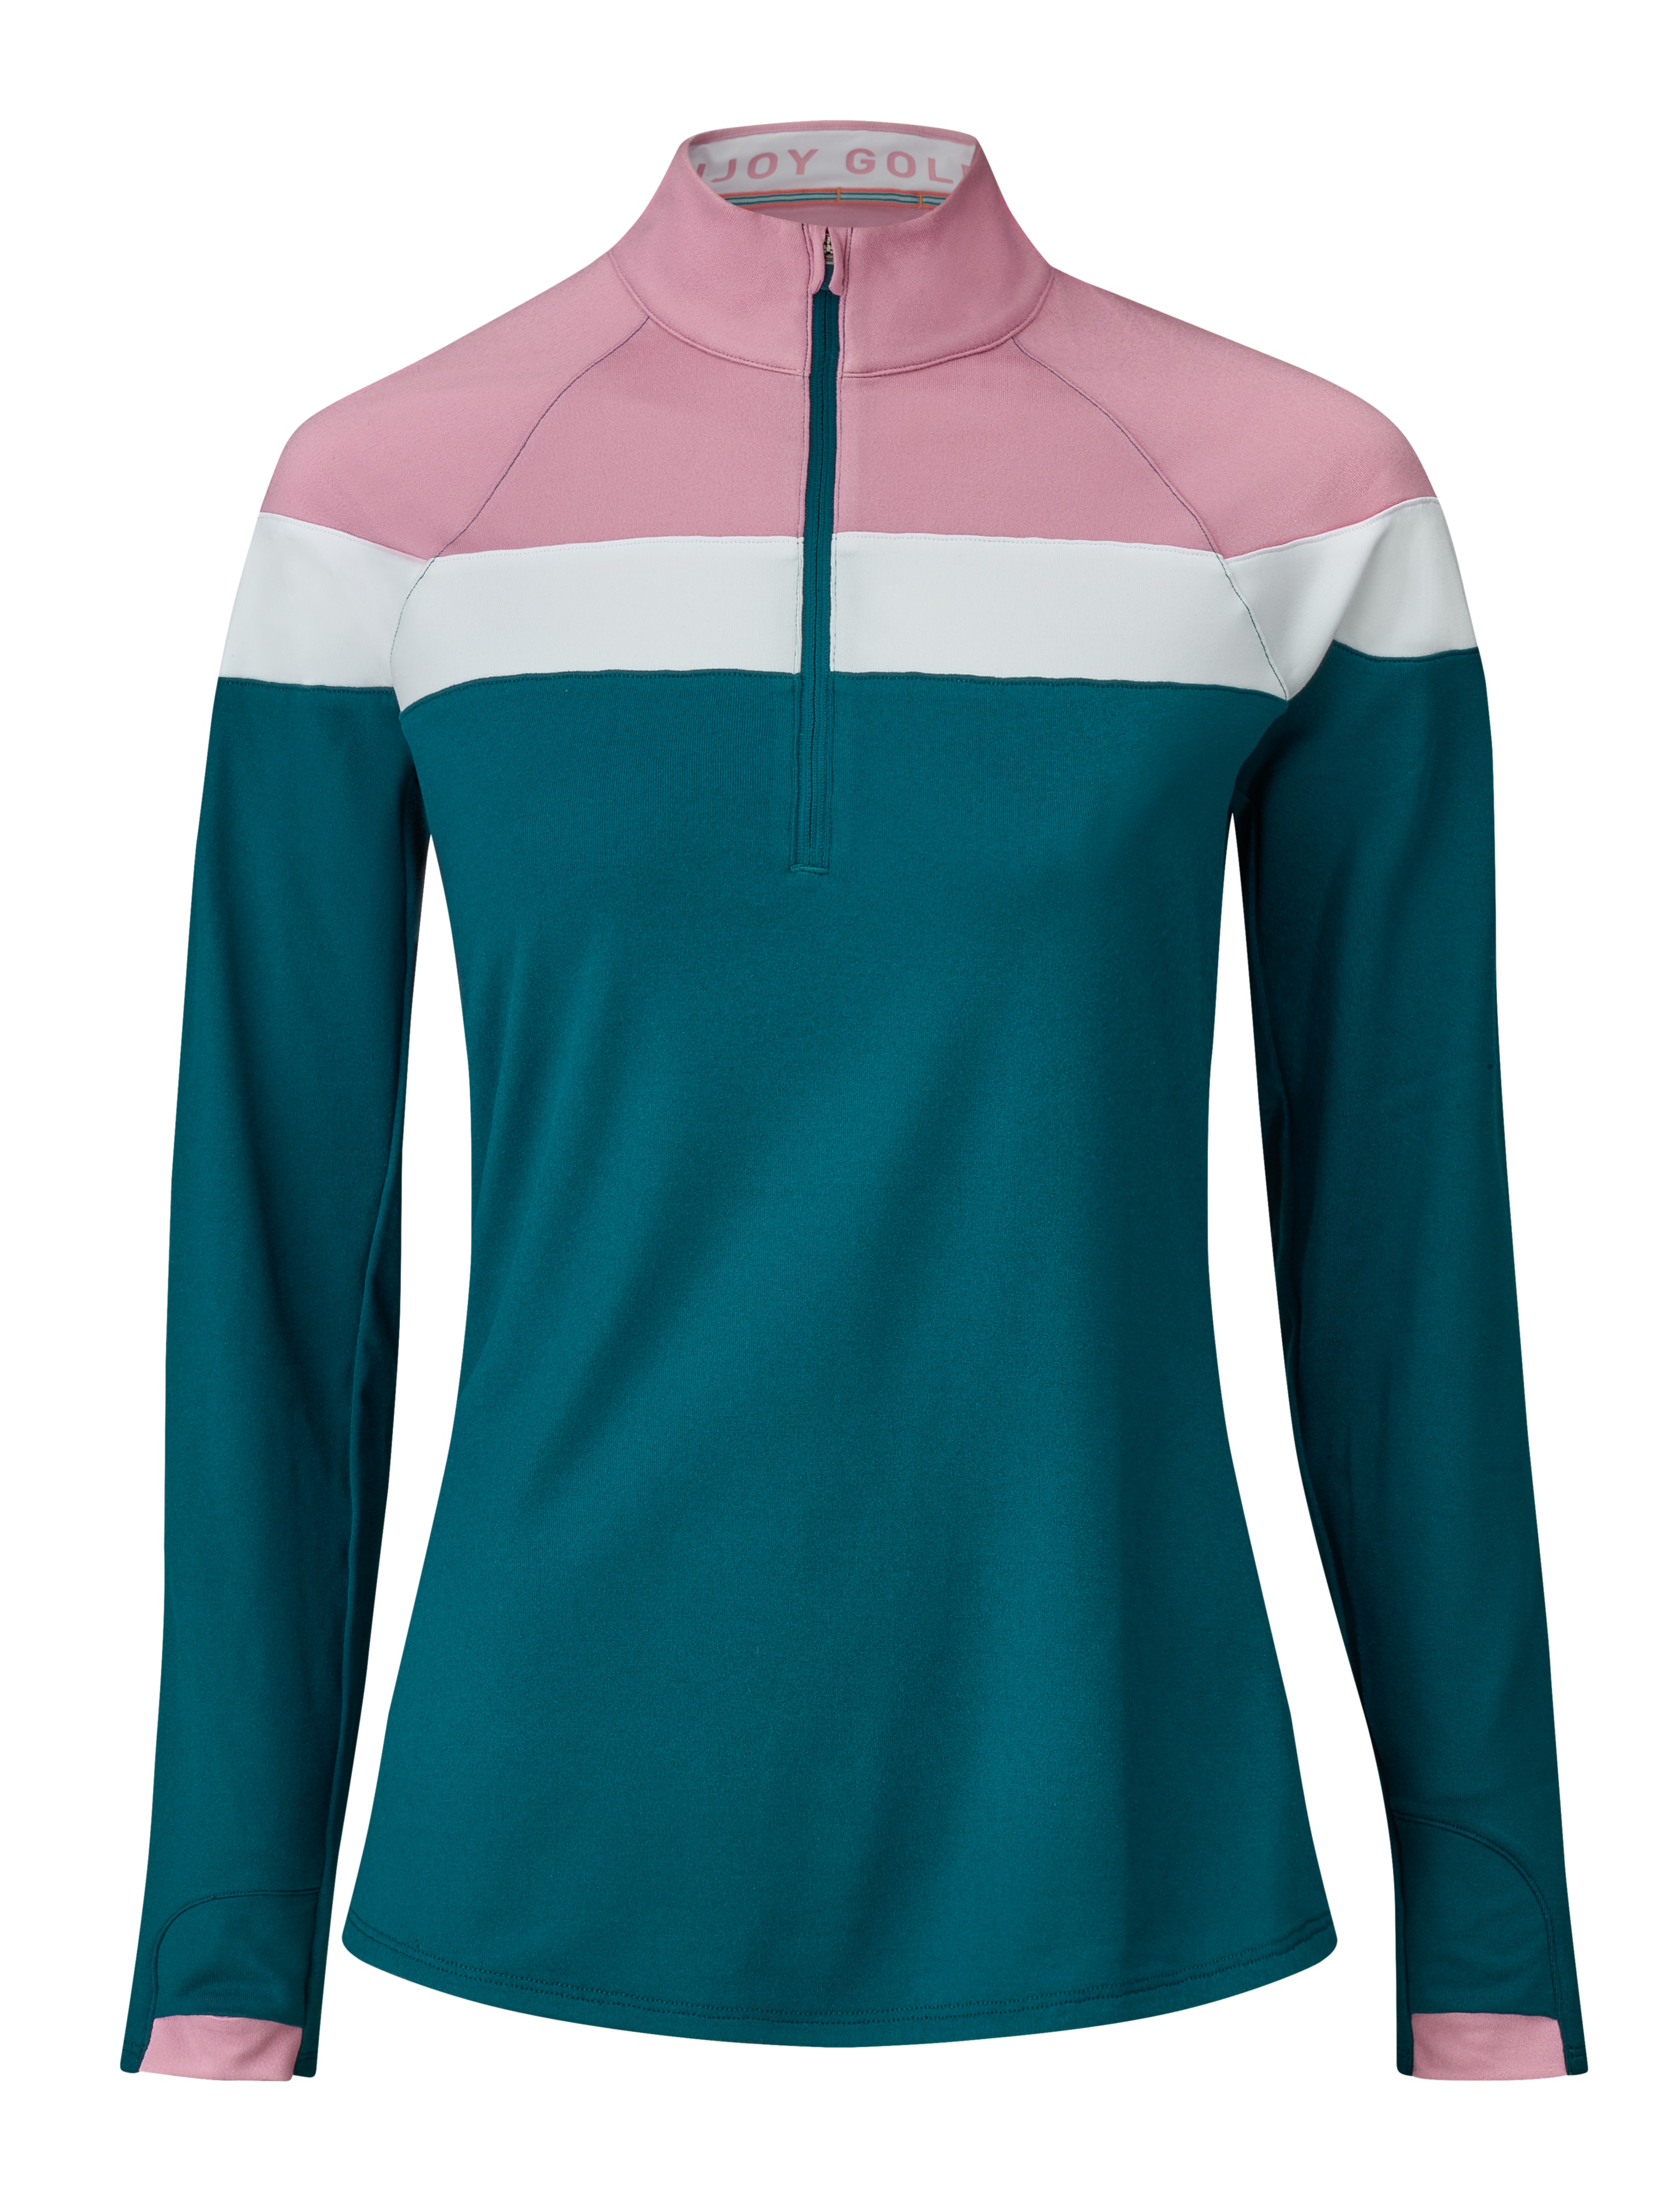 Golf-Sweater Damen, Lightweight - Ocean Tropic-Pinktastic / white, M